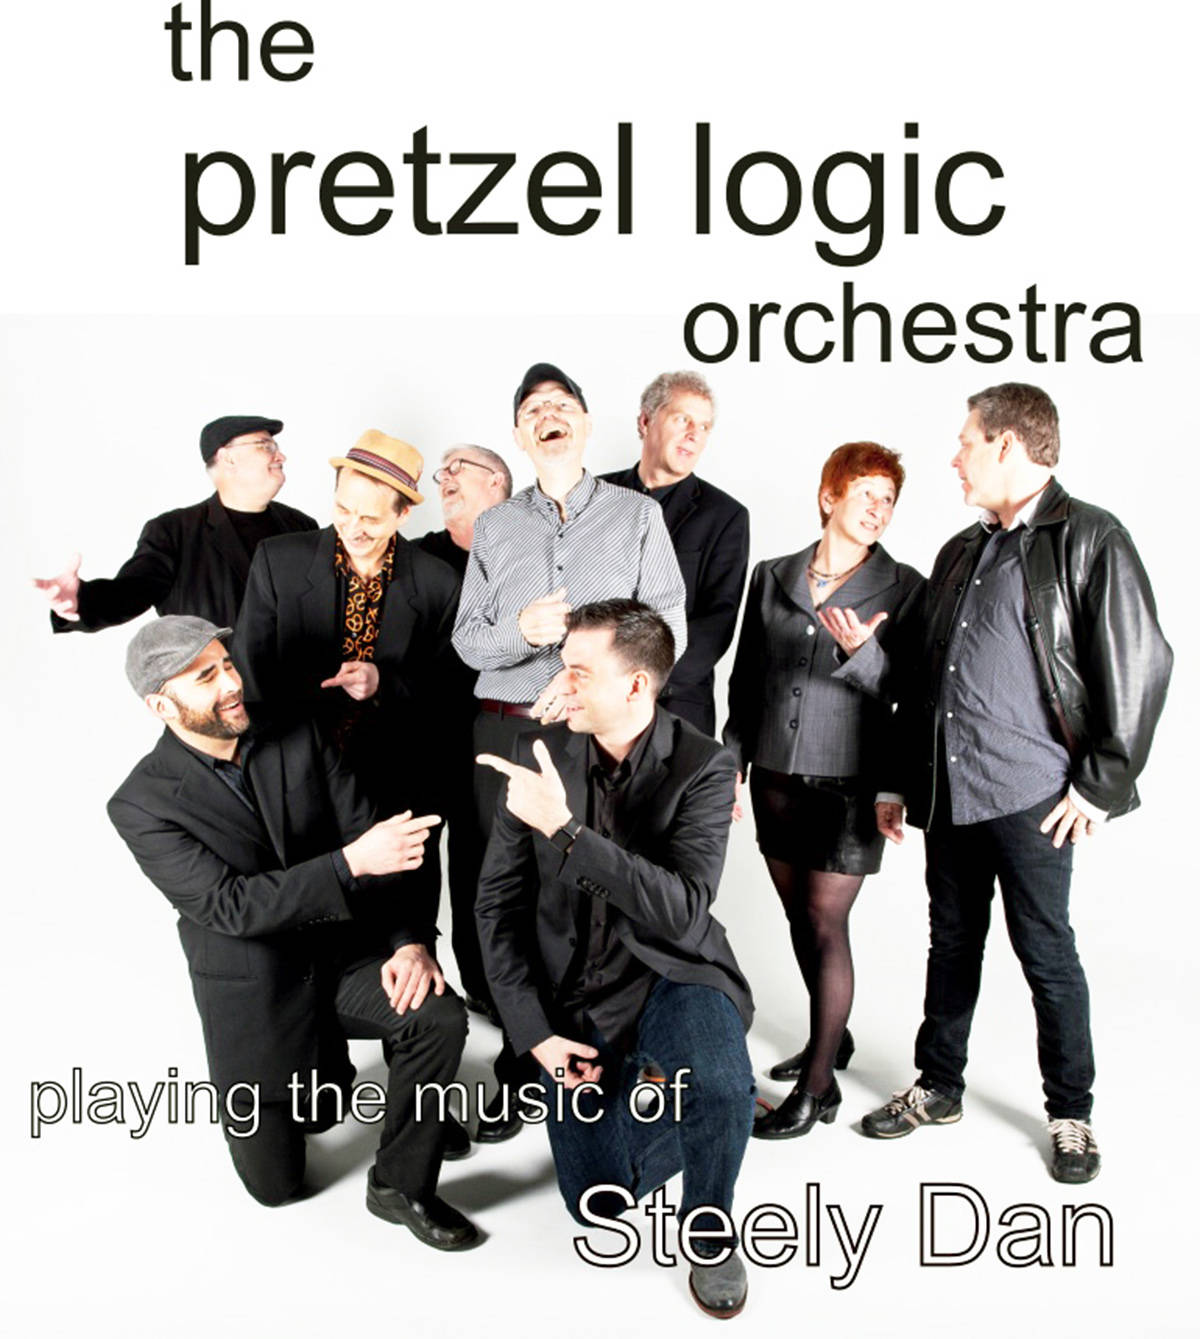 19096045_web1_the-pretzel-logic-orchestra-with-text-copy